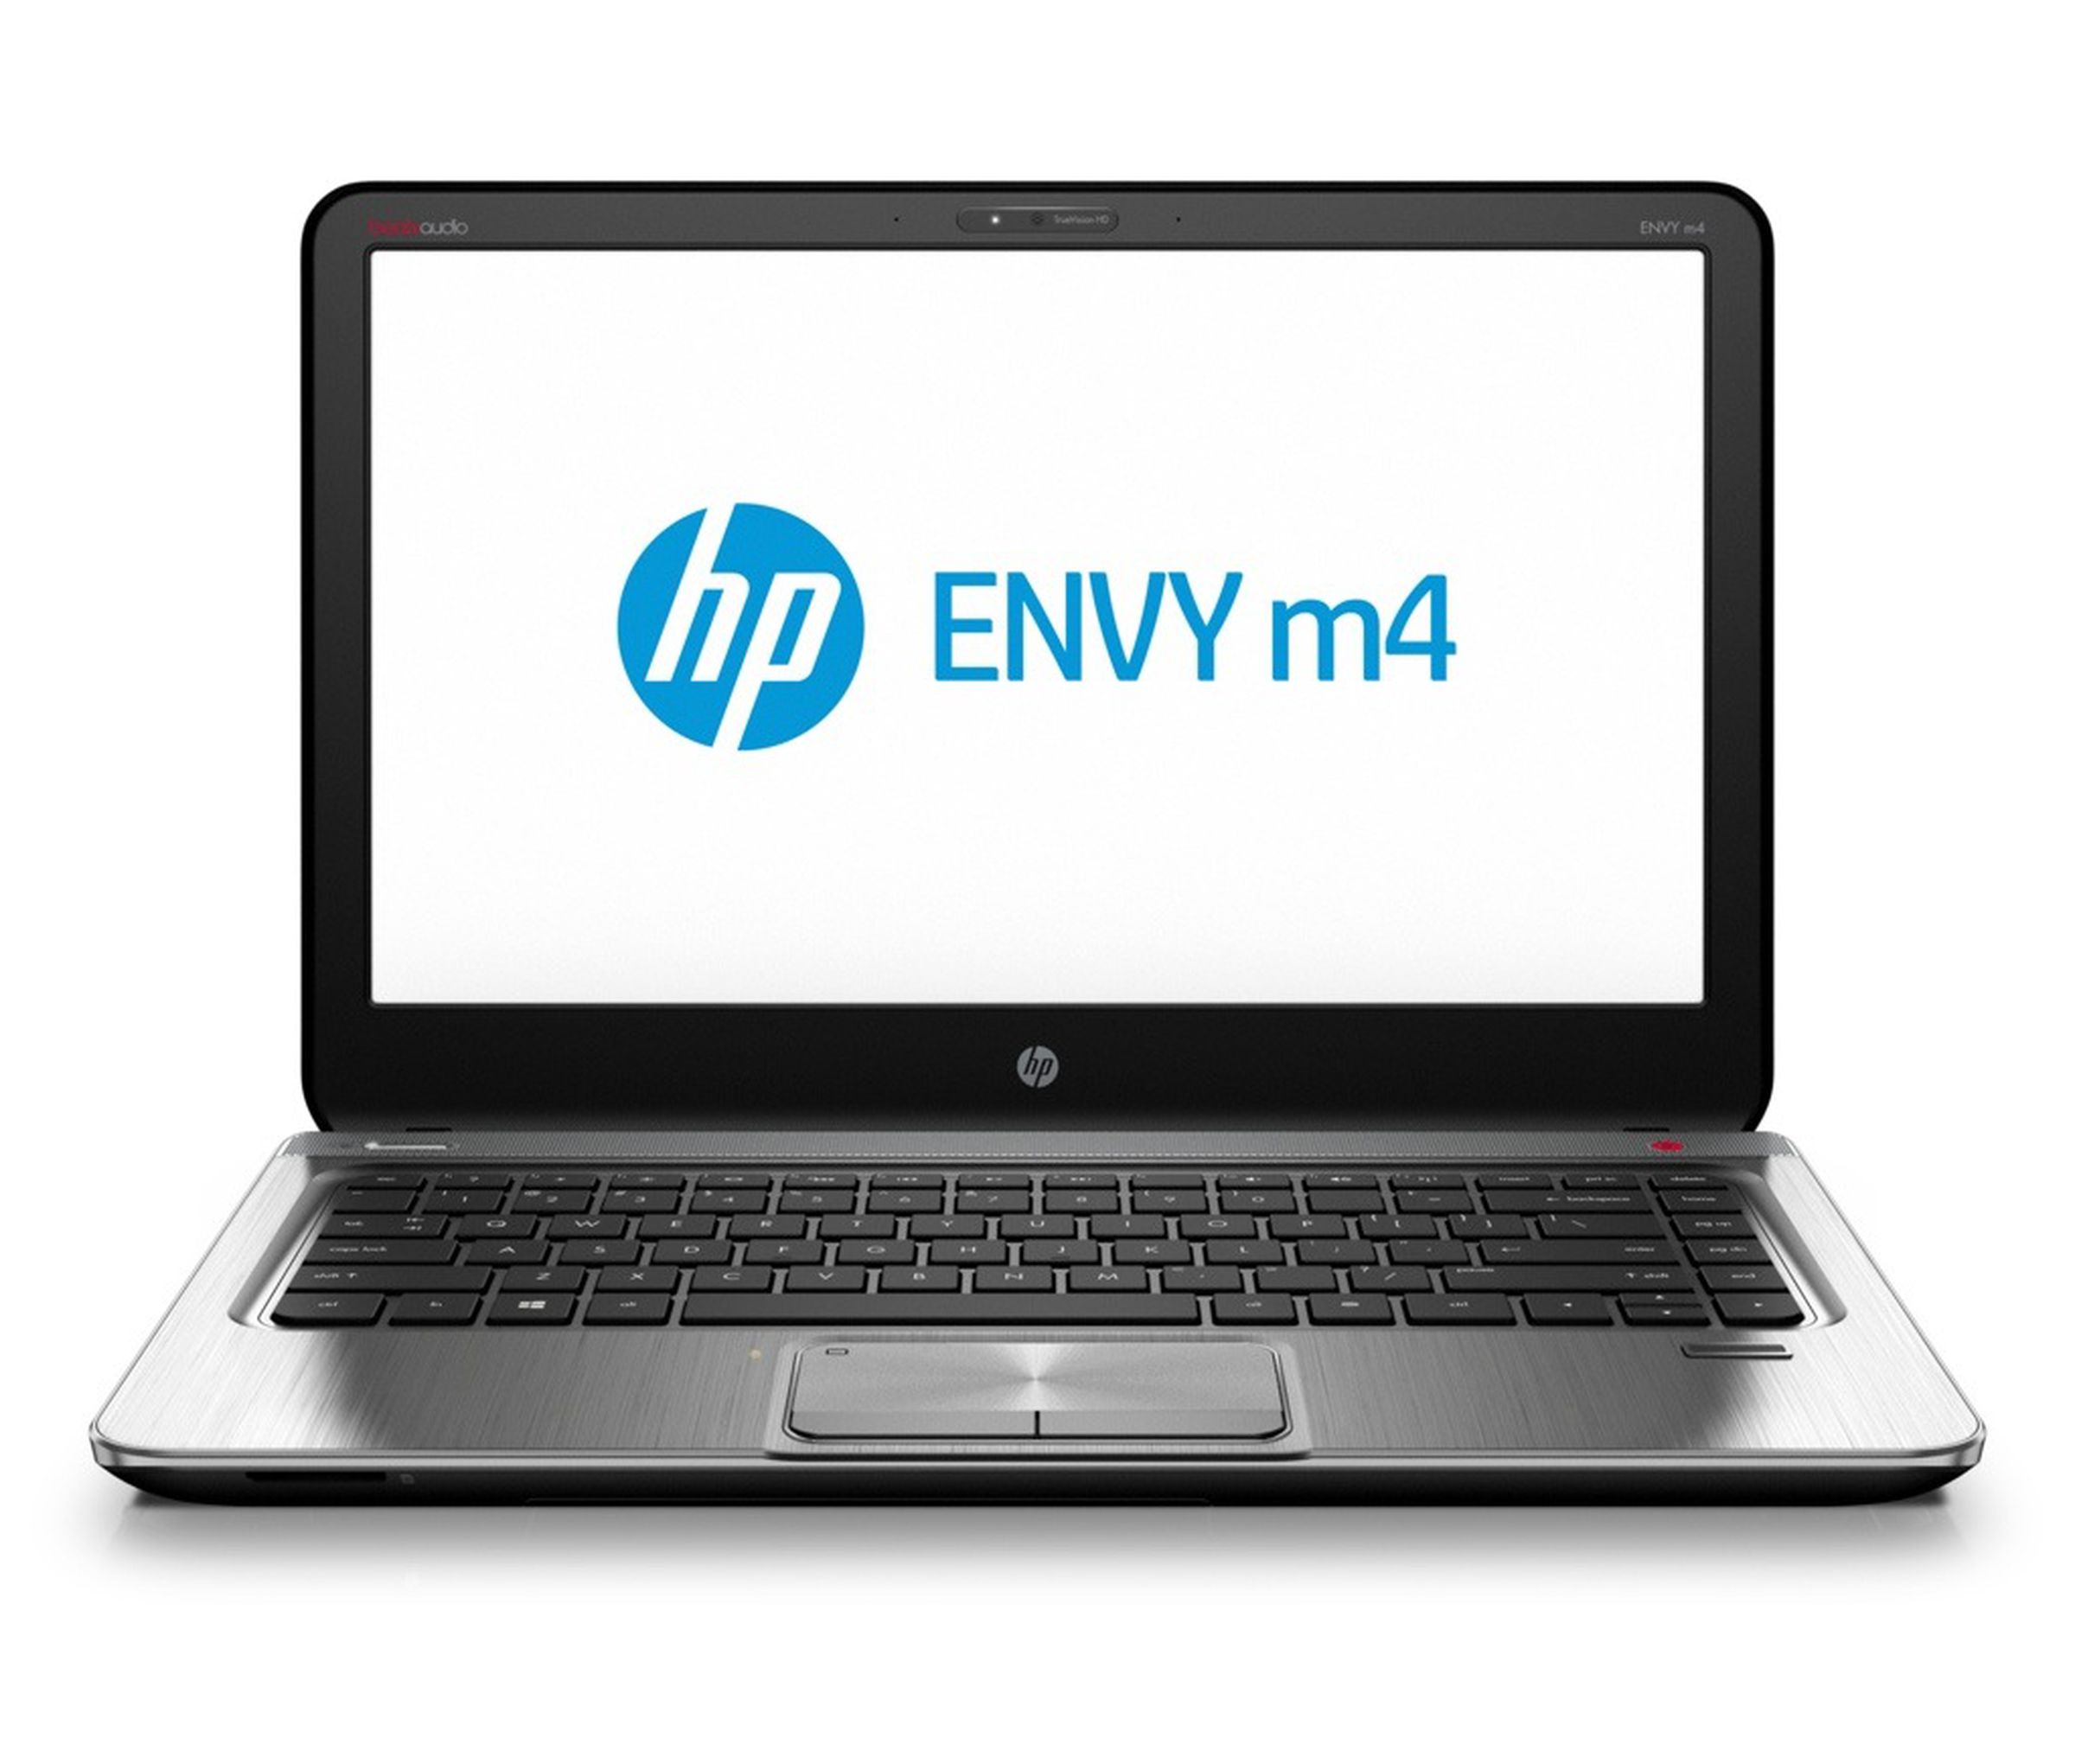 HP Envy m4 official photos